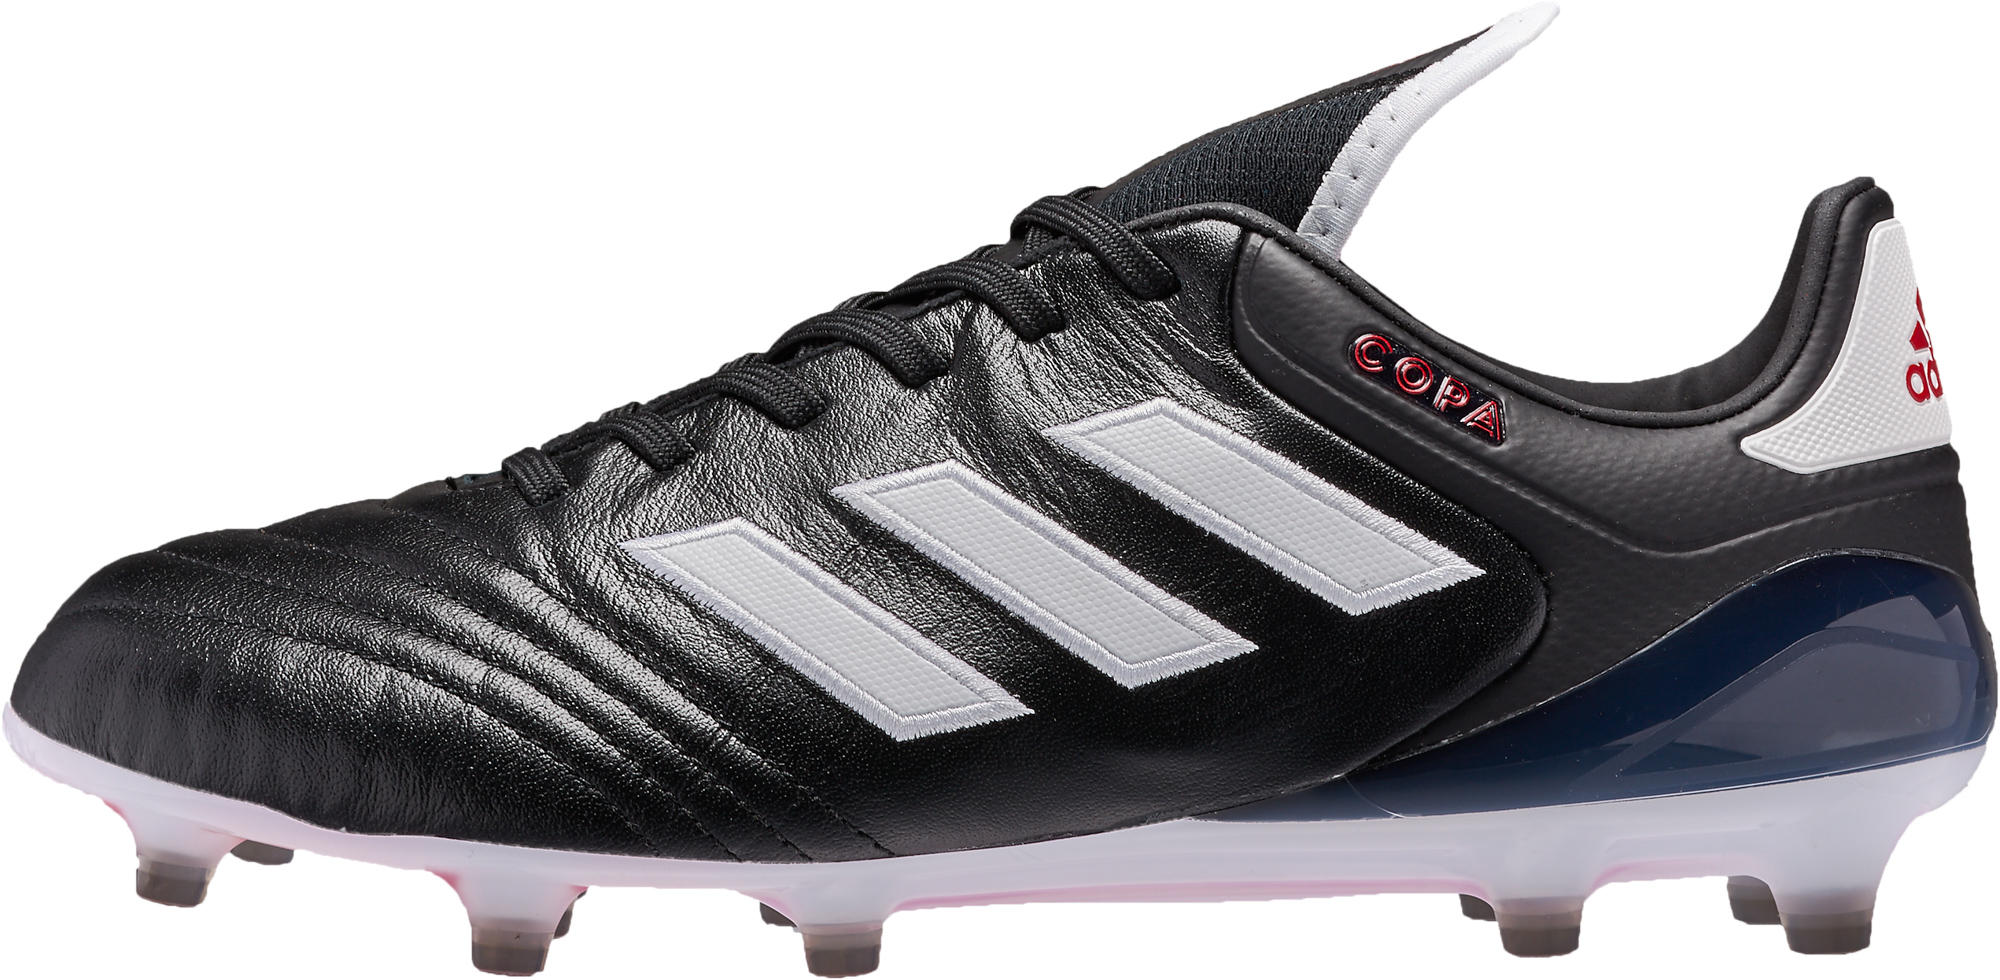 enlace cálmese Maletín Black Red adidas Copa 17.1 FG Soccer Shoes - adidas Soccer Shoes